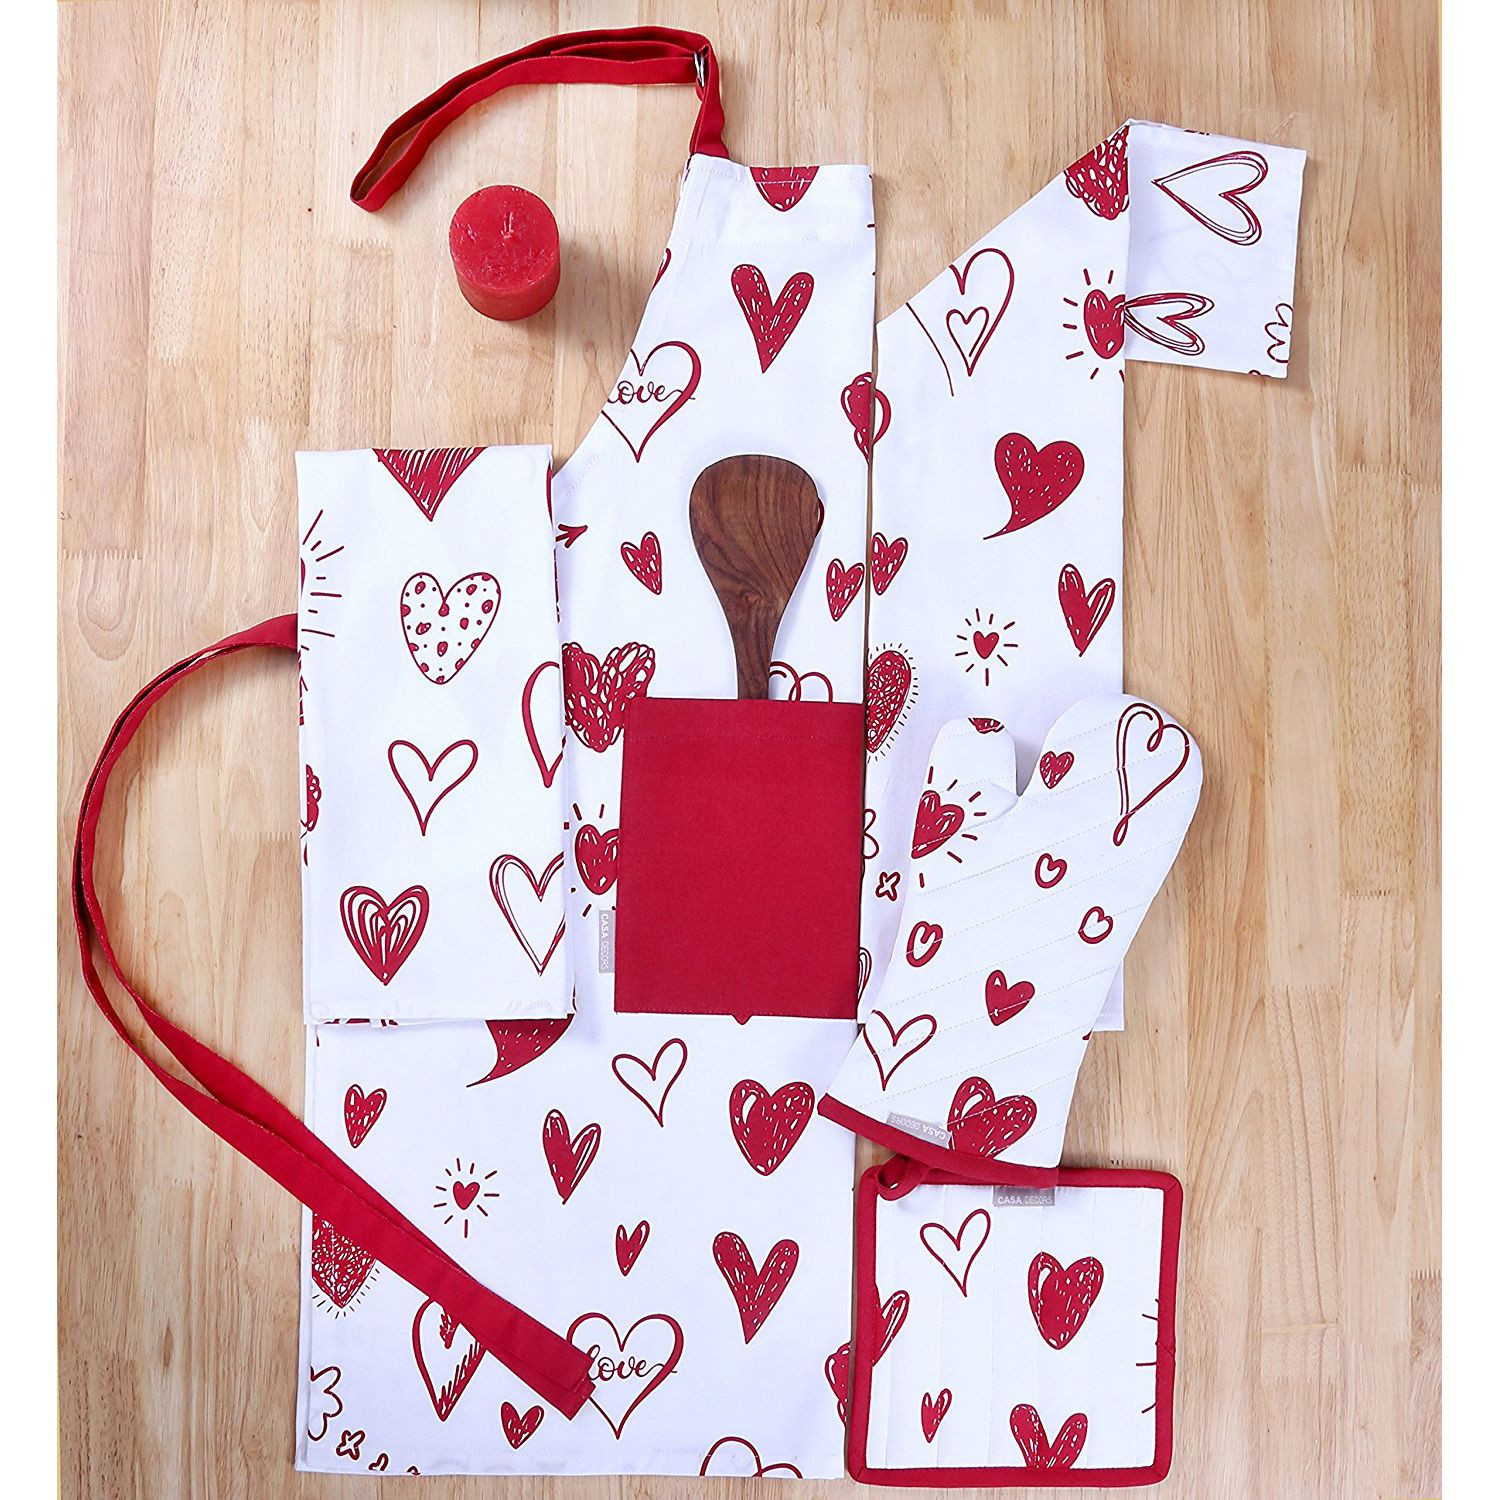 Romantic Gift Ideas For Girlfriend
 Valentine s Day Gift Ideas for Her Girlfriend Wife